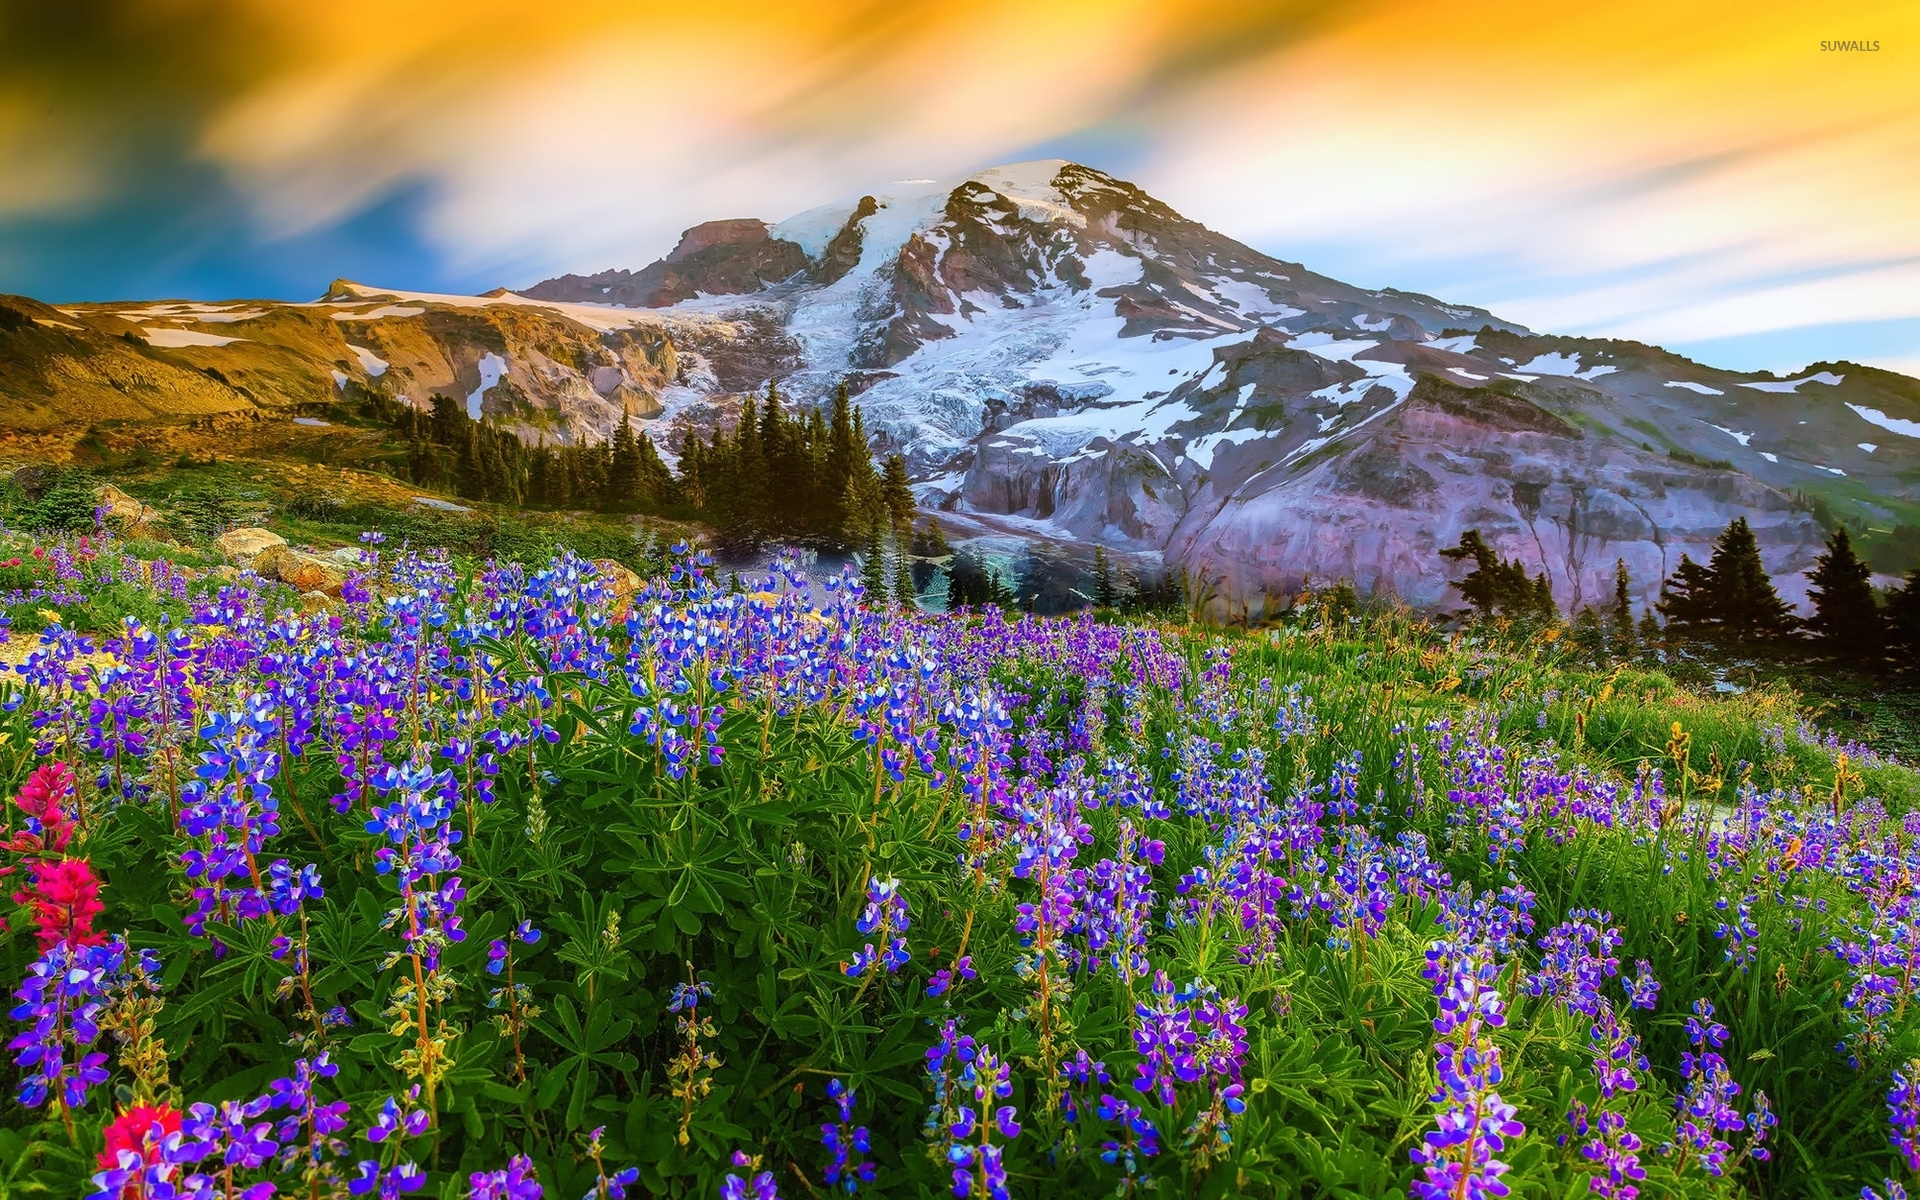 Mount Rainier phone wallpaper 1080P 2k 4k Full HD Wallpapers  Backgrounds Free Download  Wallpaper Crafter